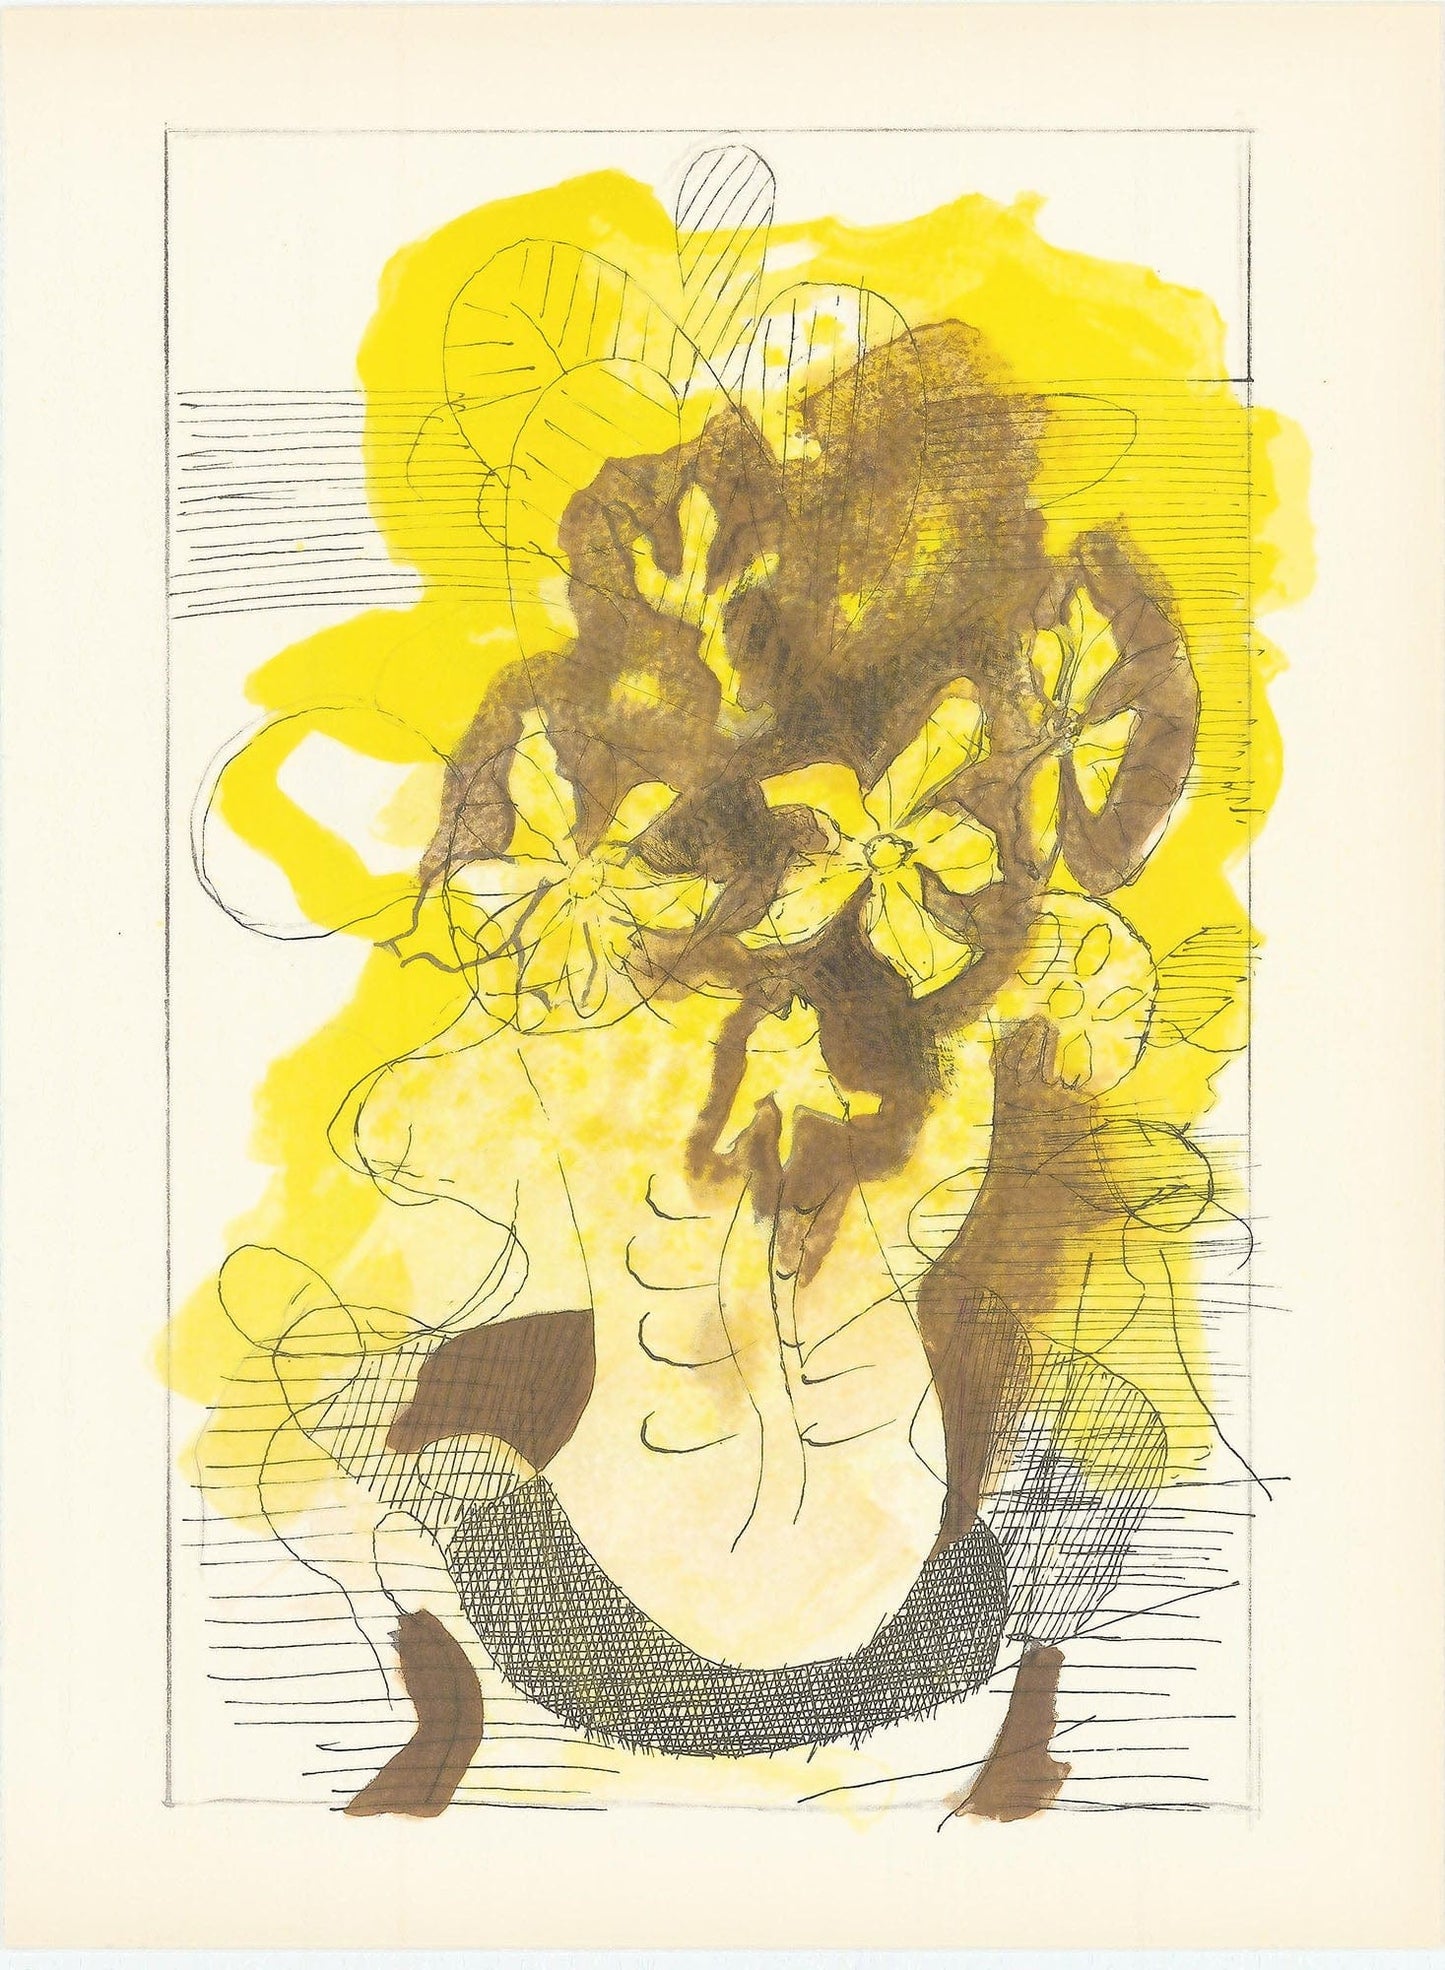 Georges Braque, "Untitled XV" ZOOM Vol. 8 No. 31 ET 32 verve lithograph